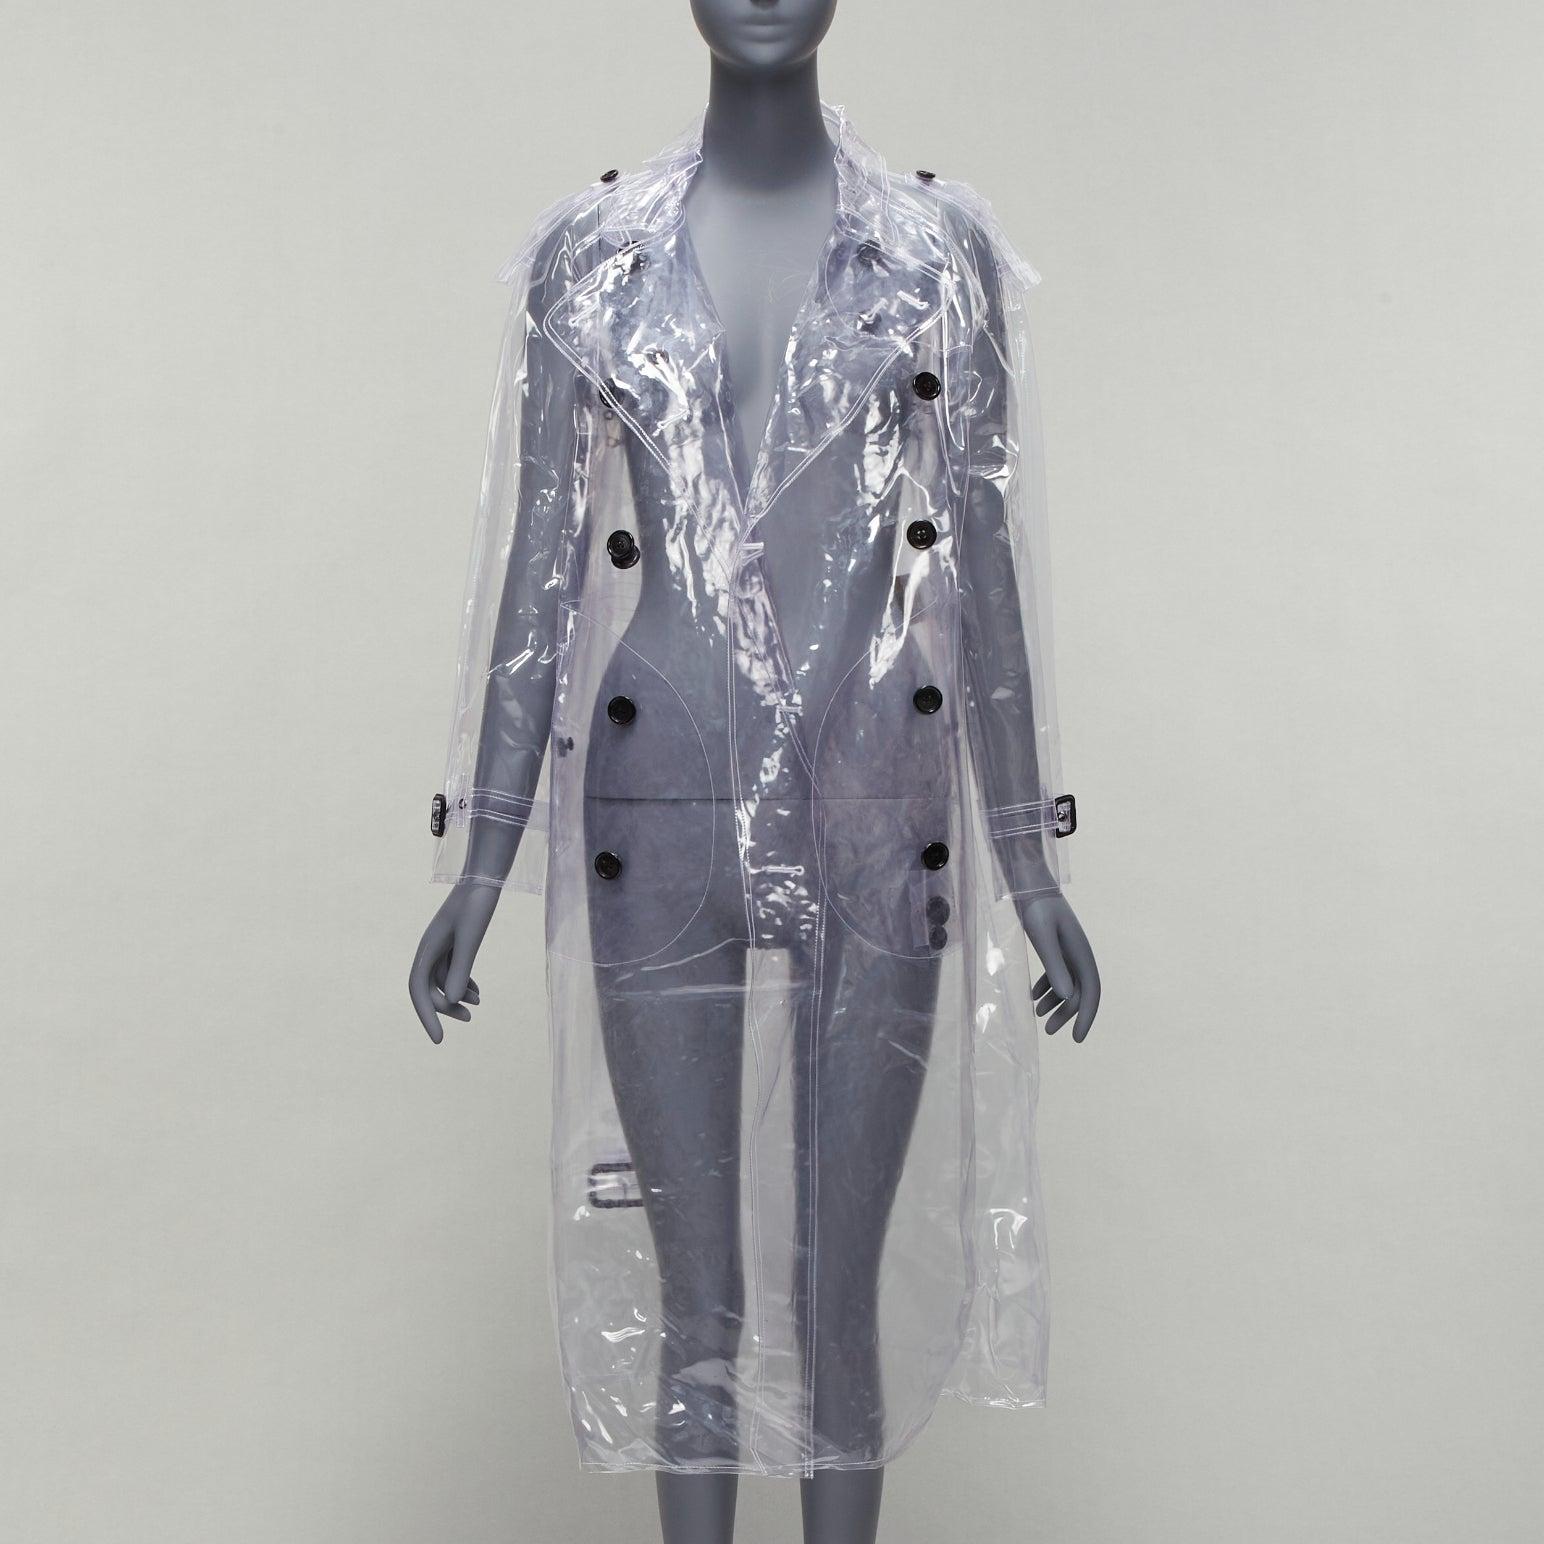 Gray rare BURBERRY 2018 transparent clear PVC trench coat raincoat UK6 M